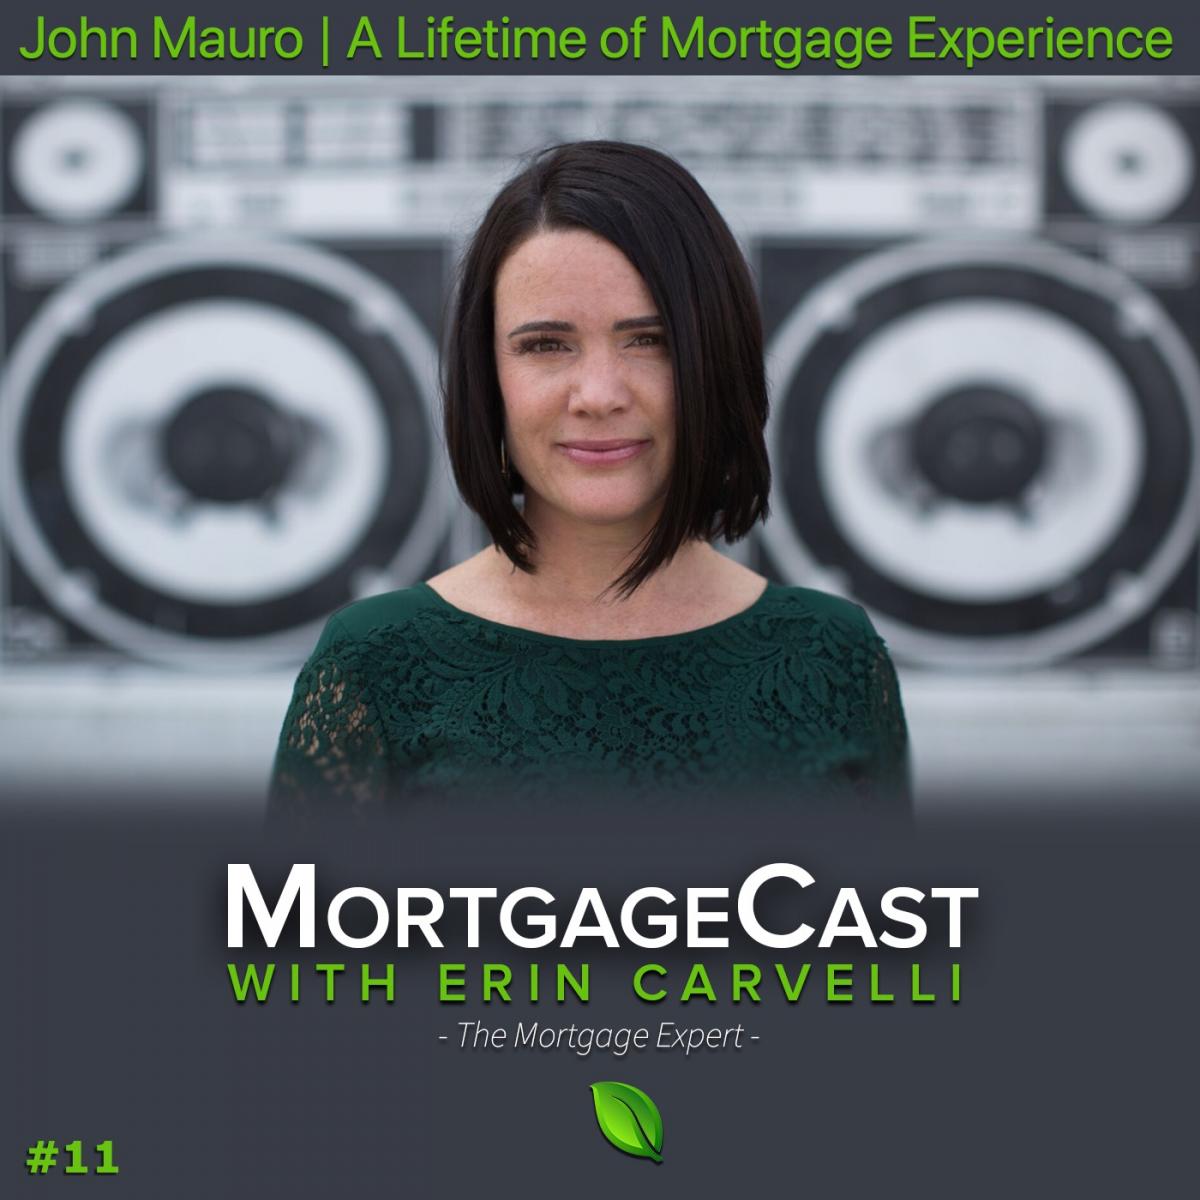 MortgageCast #11 with John Mauro